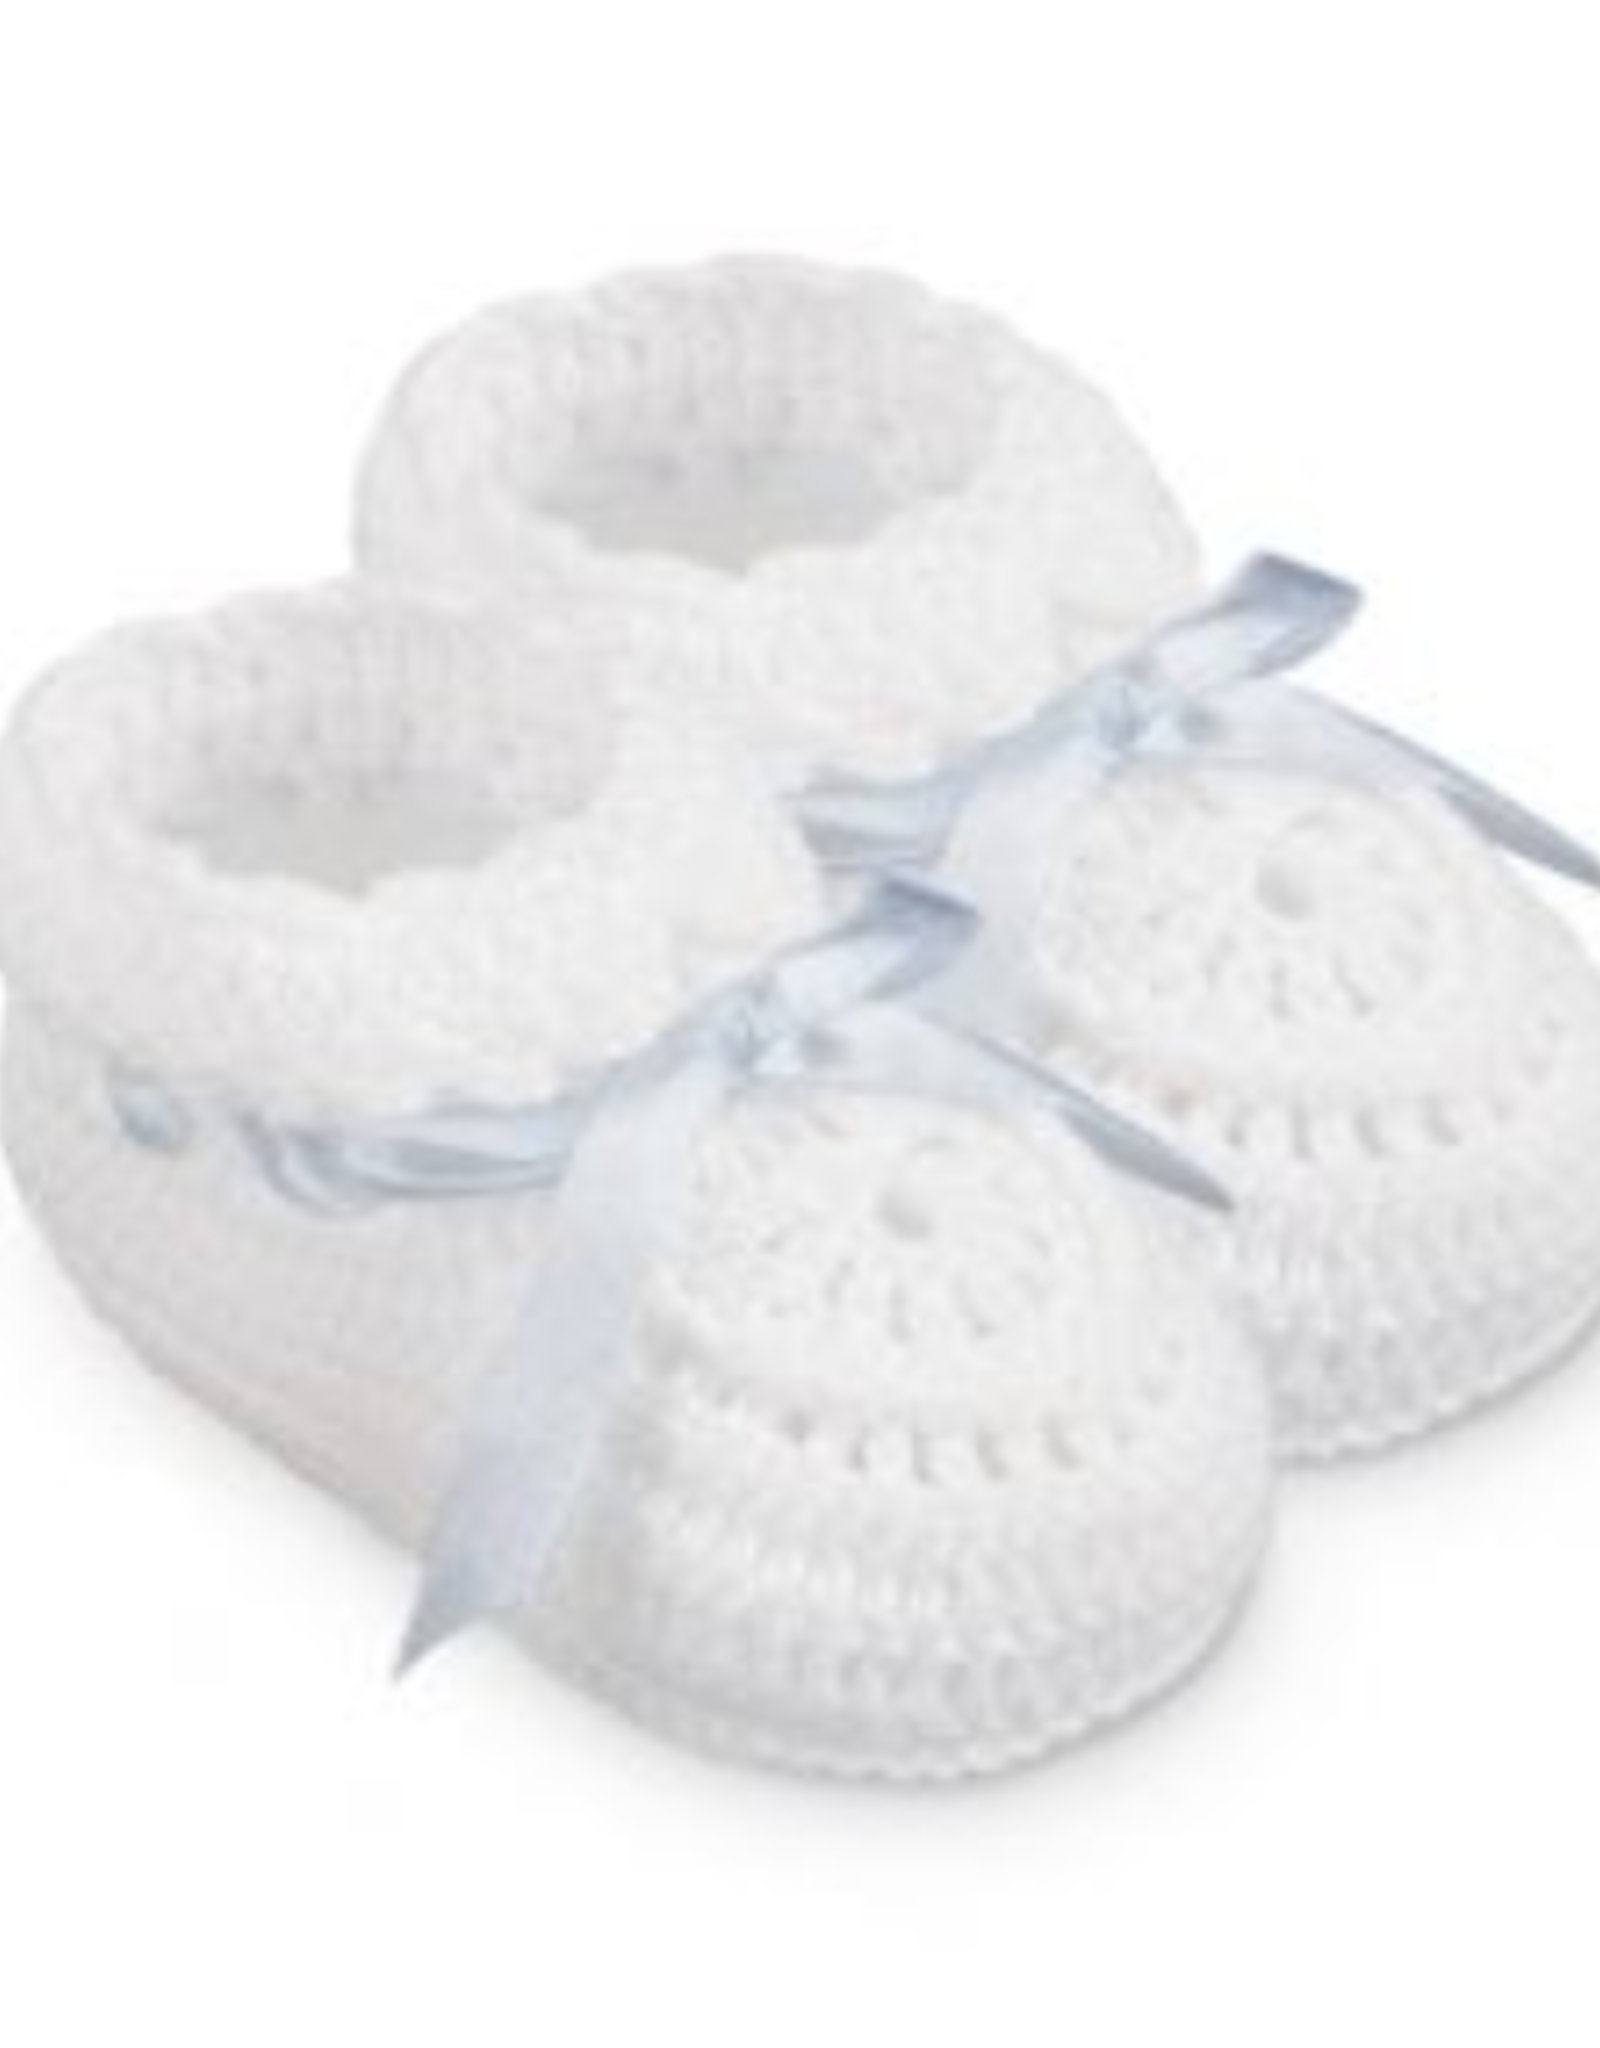 Jefferies Socks White And Blue Crochet Bootie 2681 Newborn